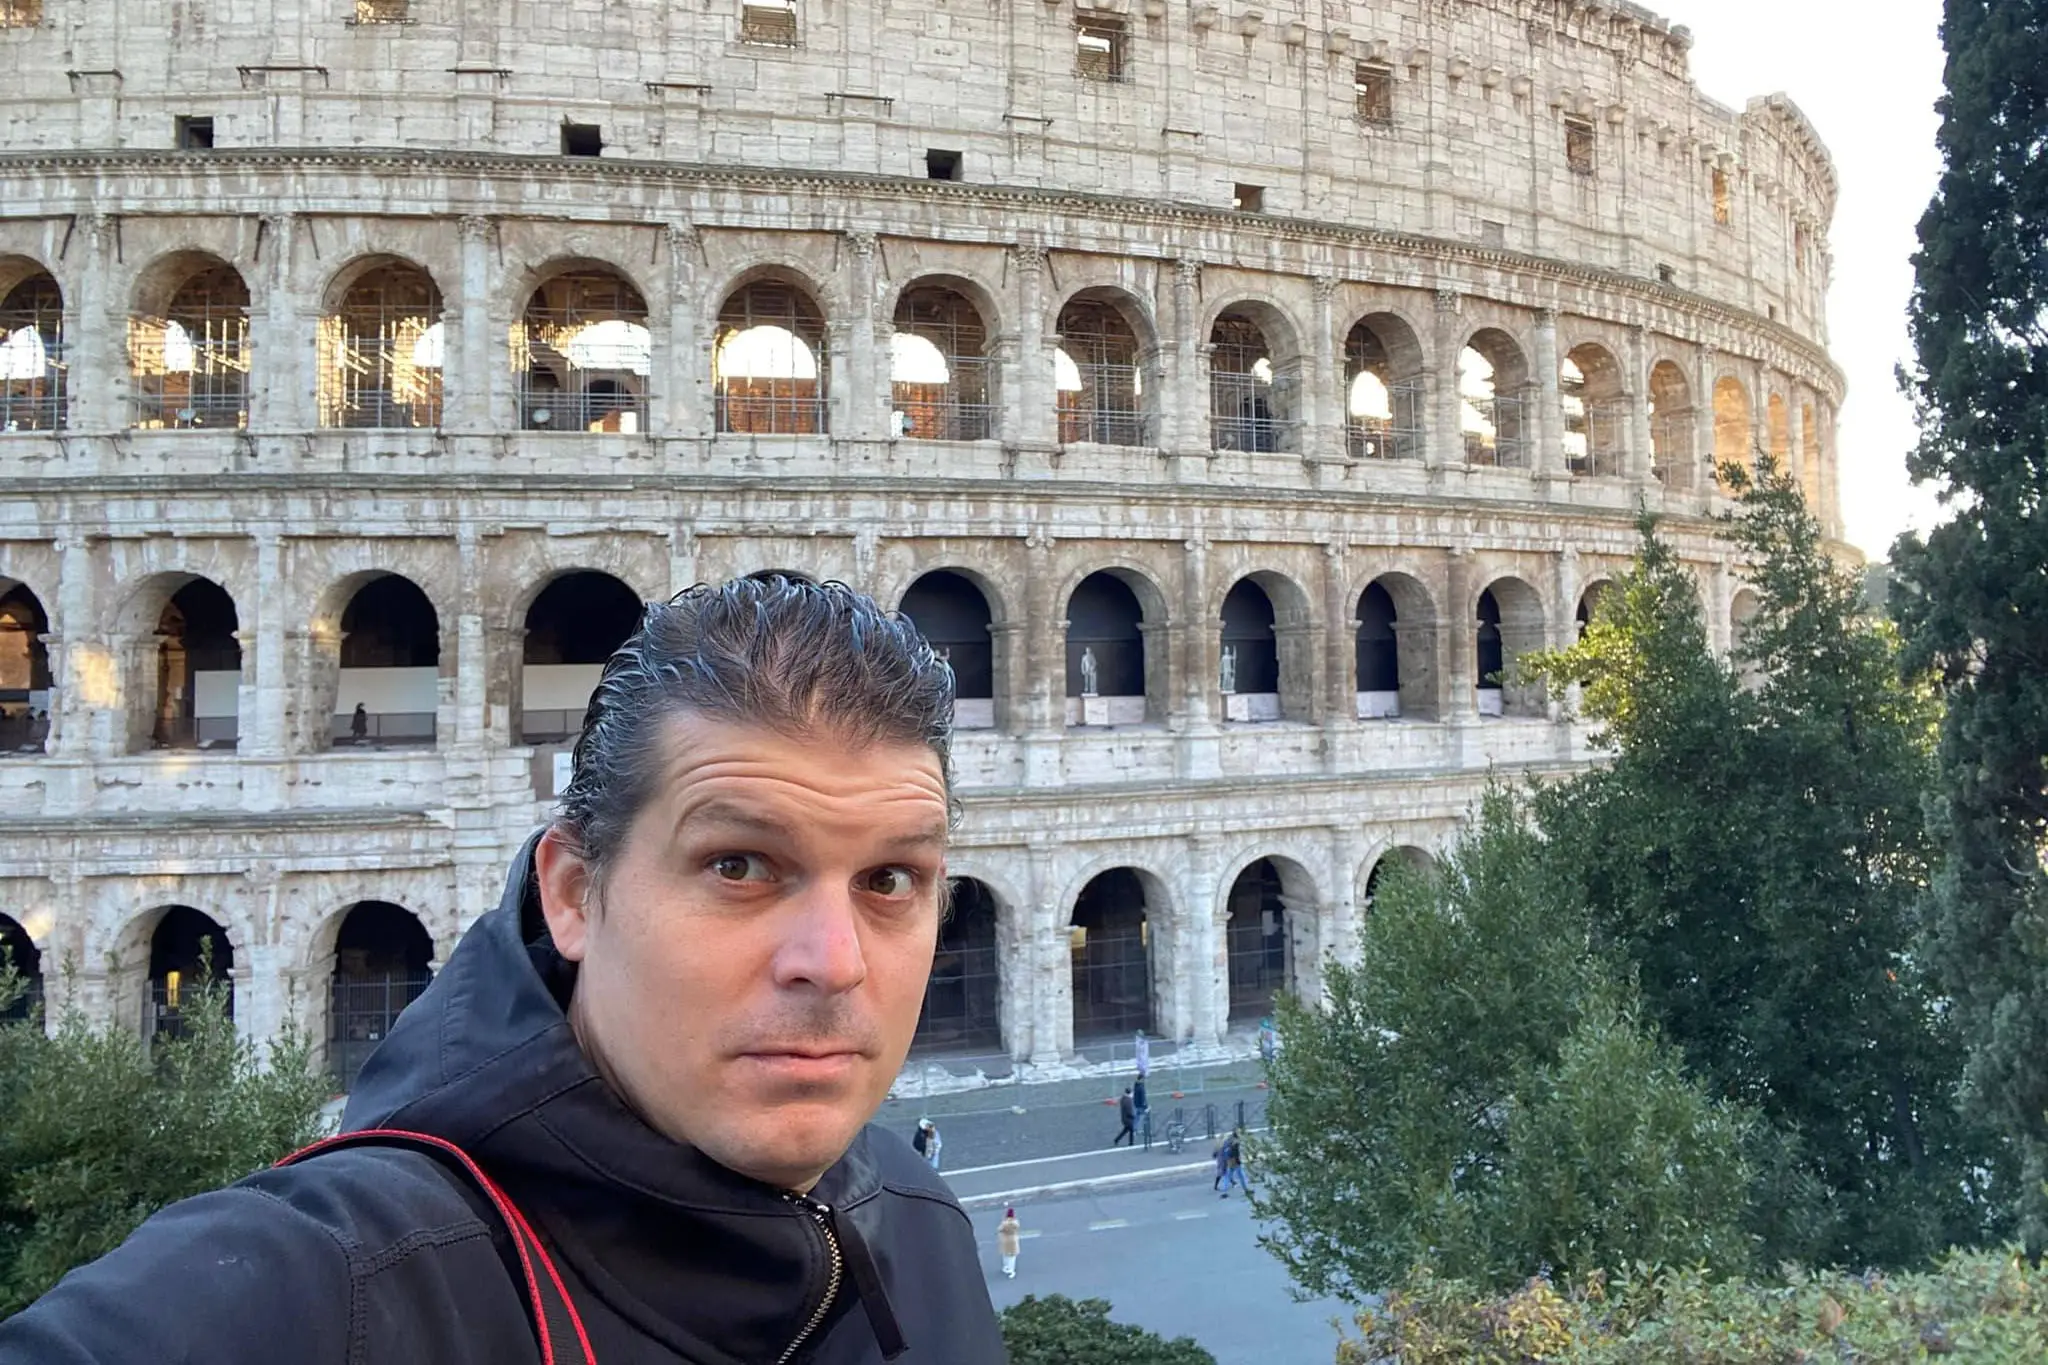 Daniel Carlbom in front of the Colosseum in Rome